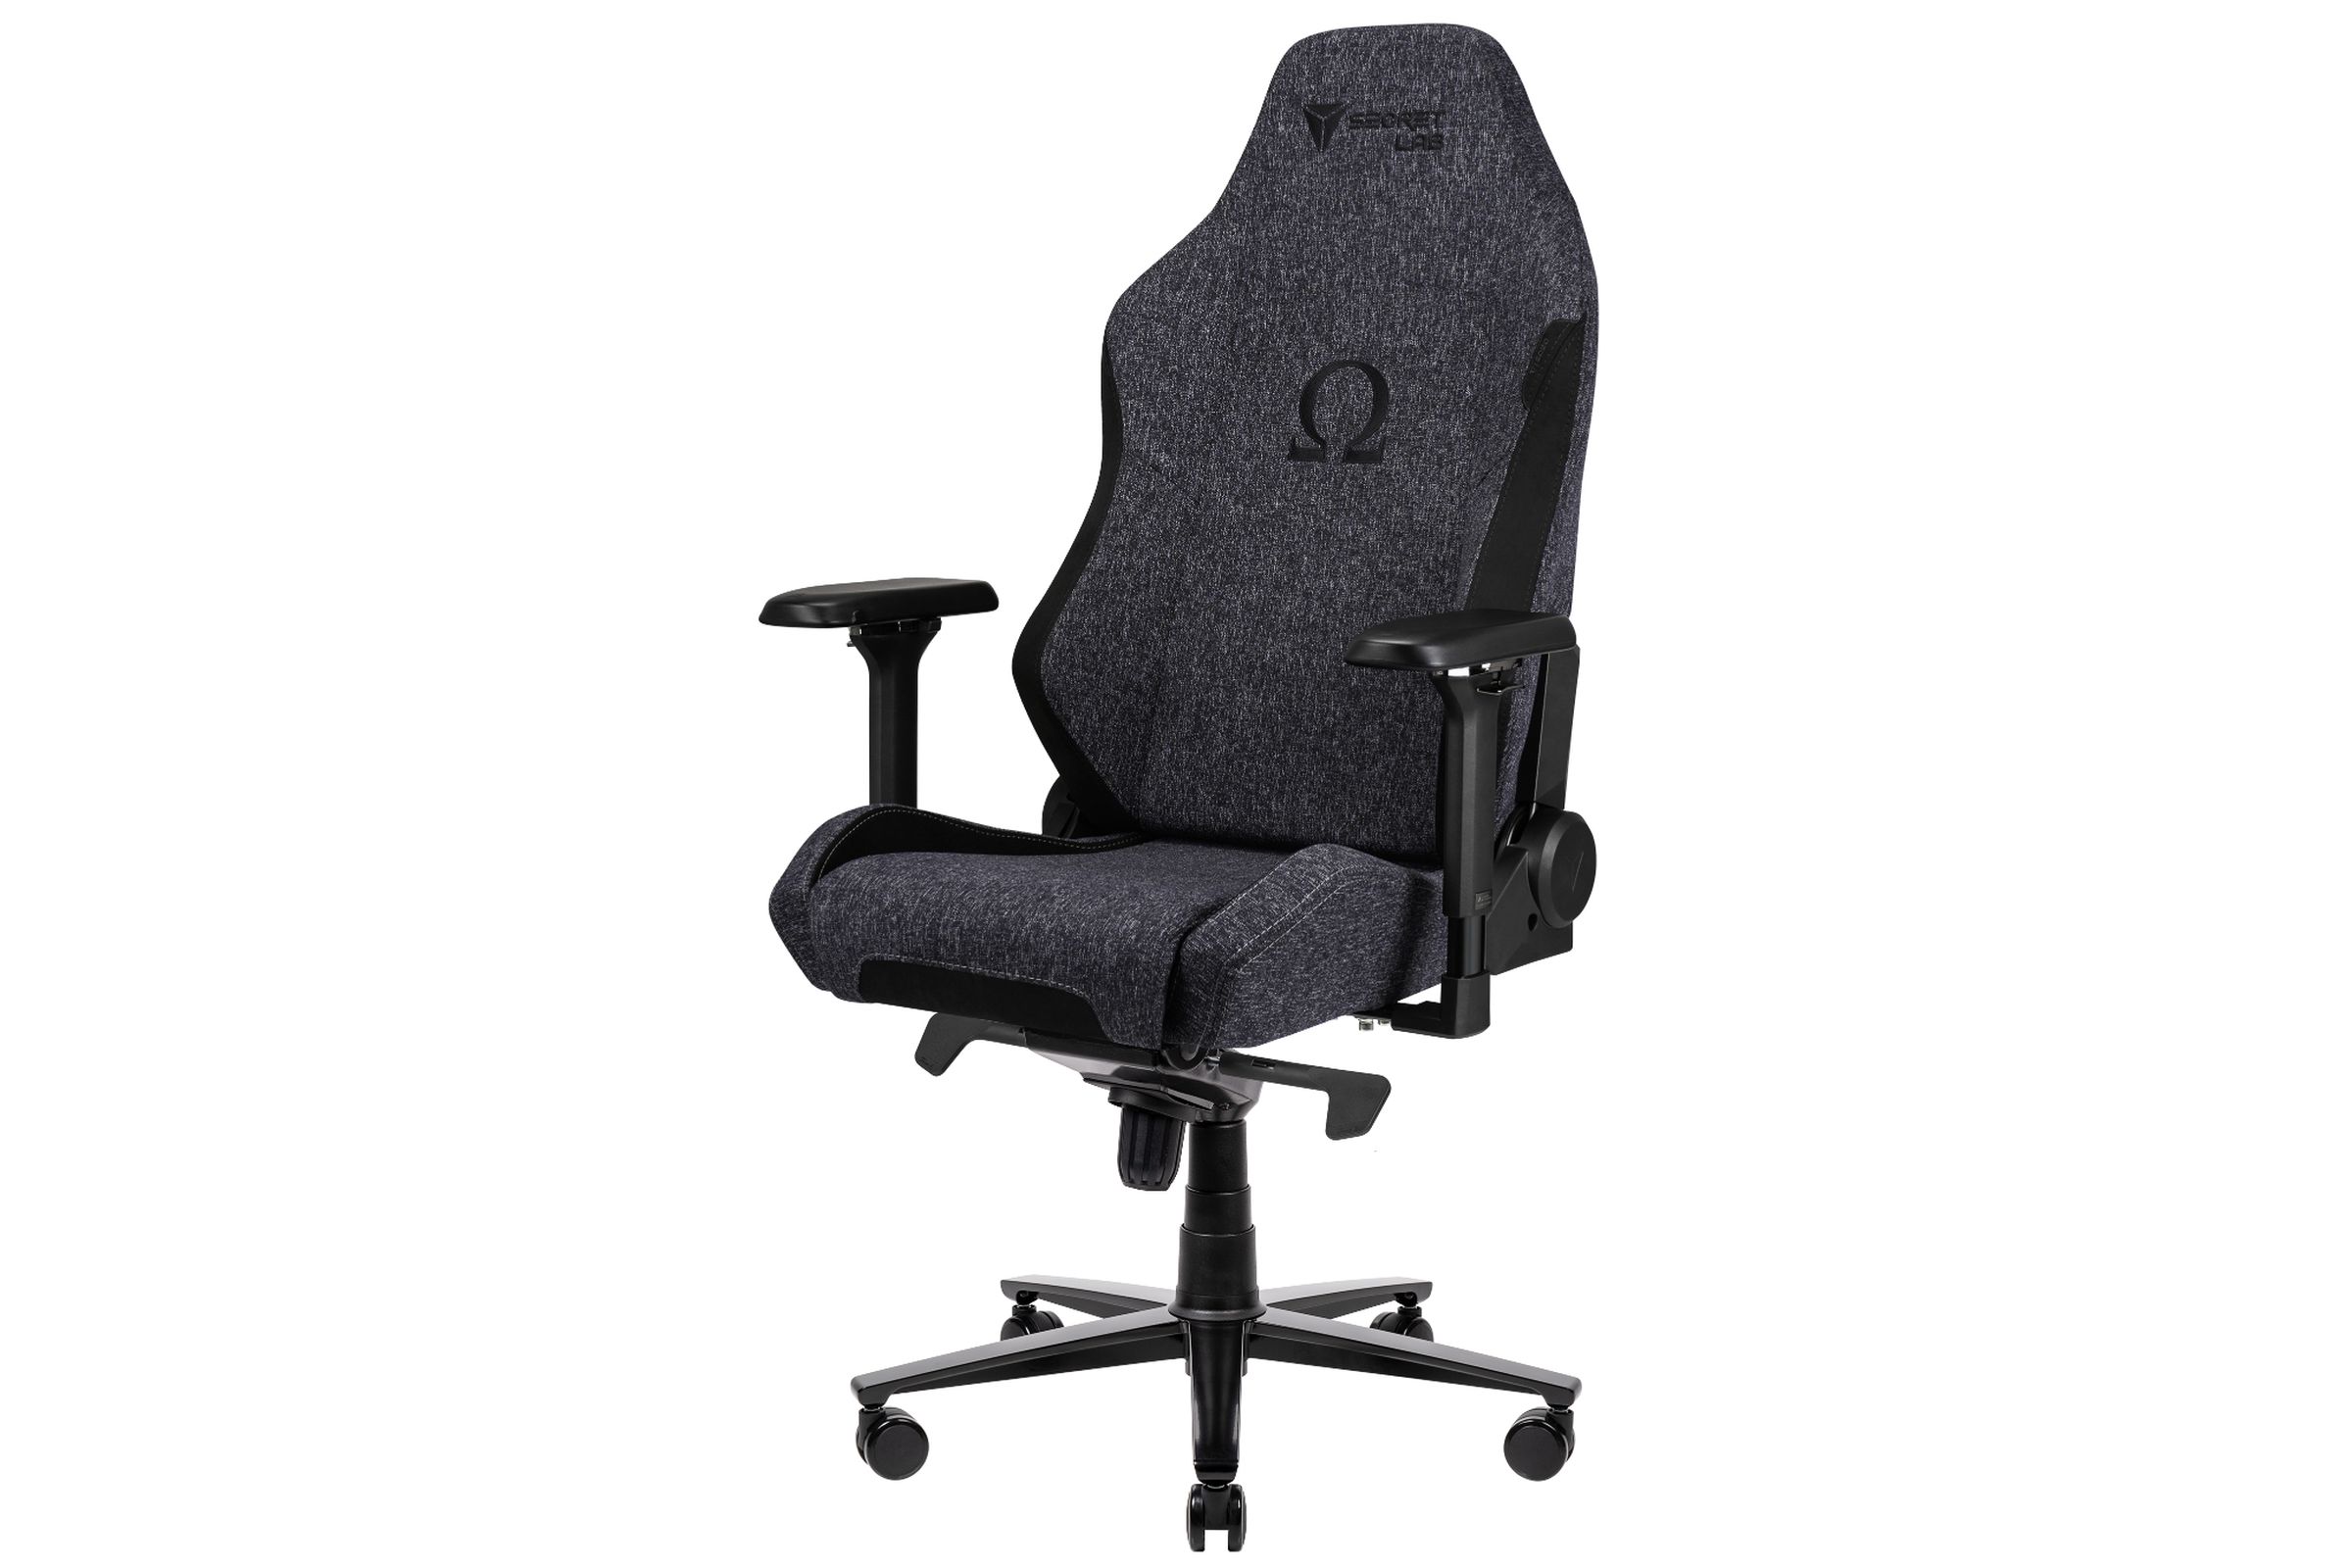 Secretlab Omega chair